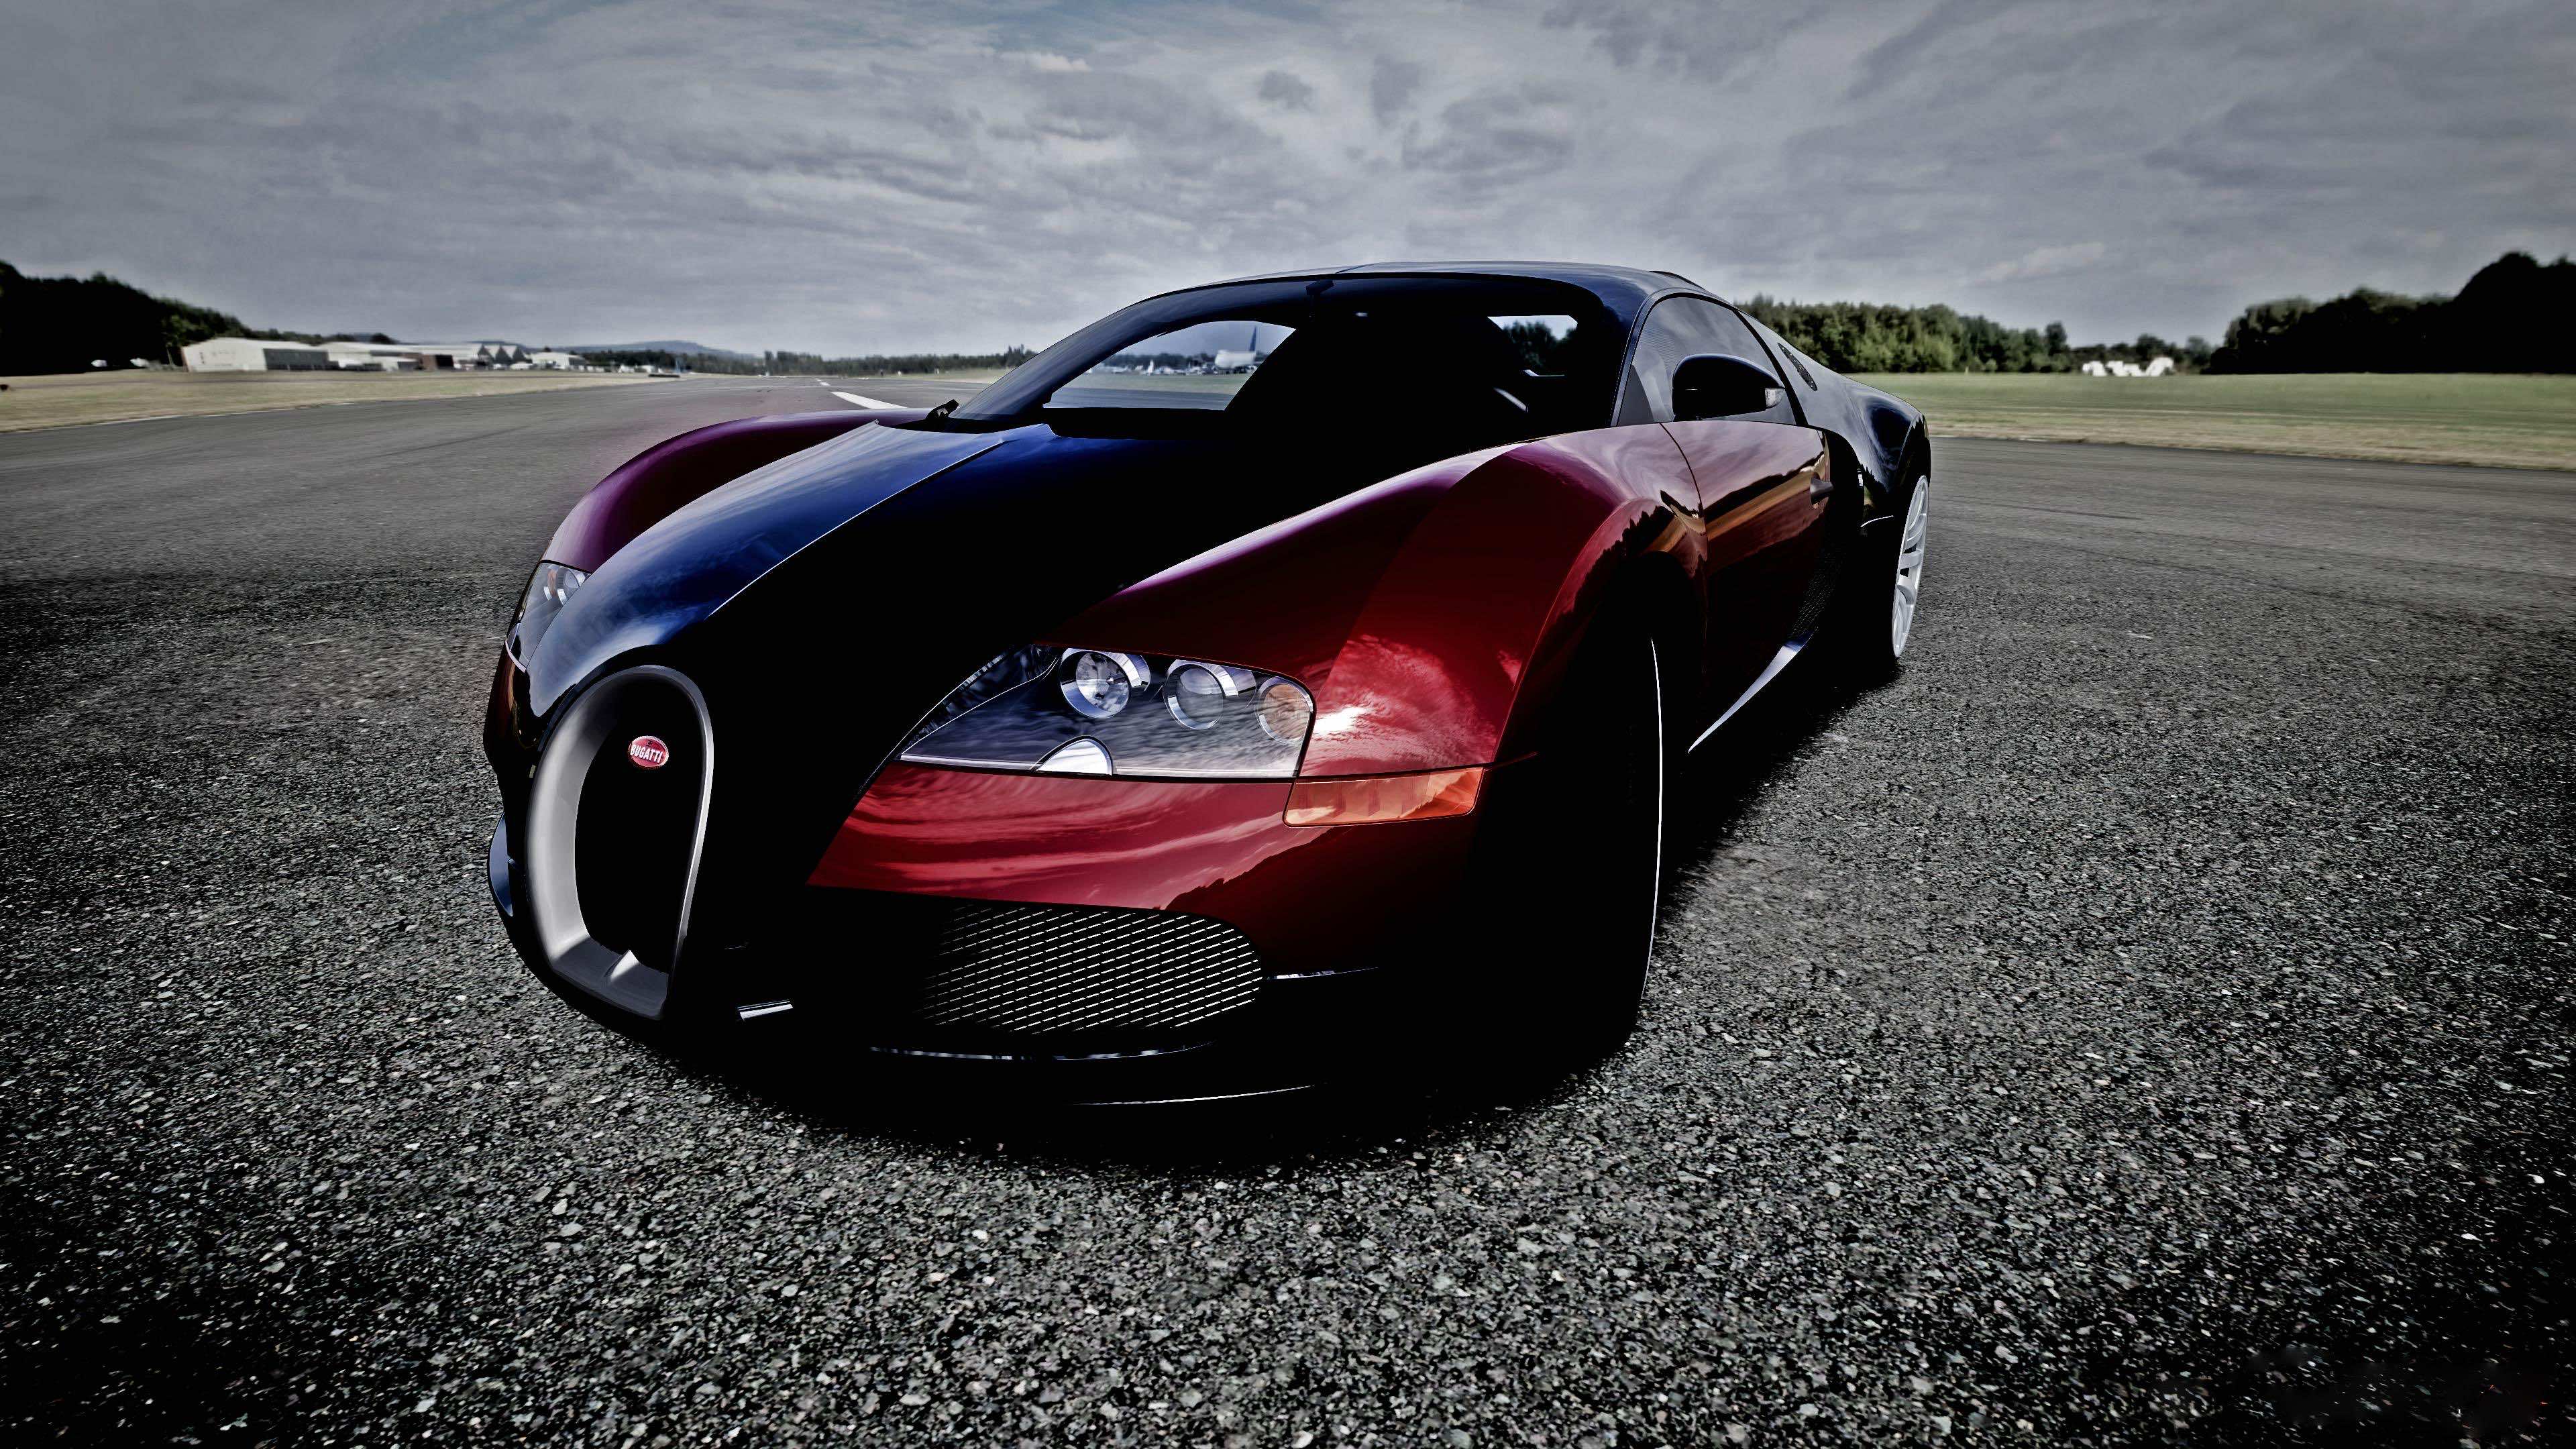 Bugatti Chiron Wallpaper Hd Download